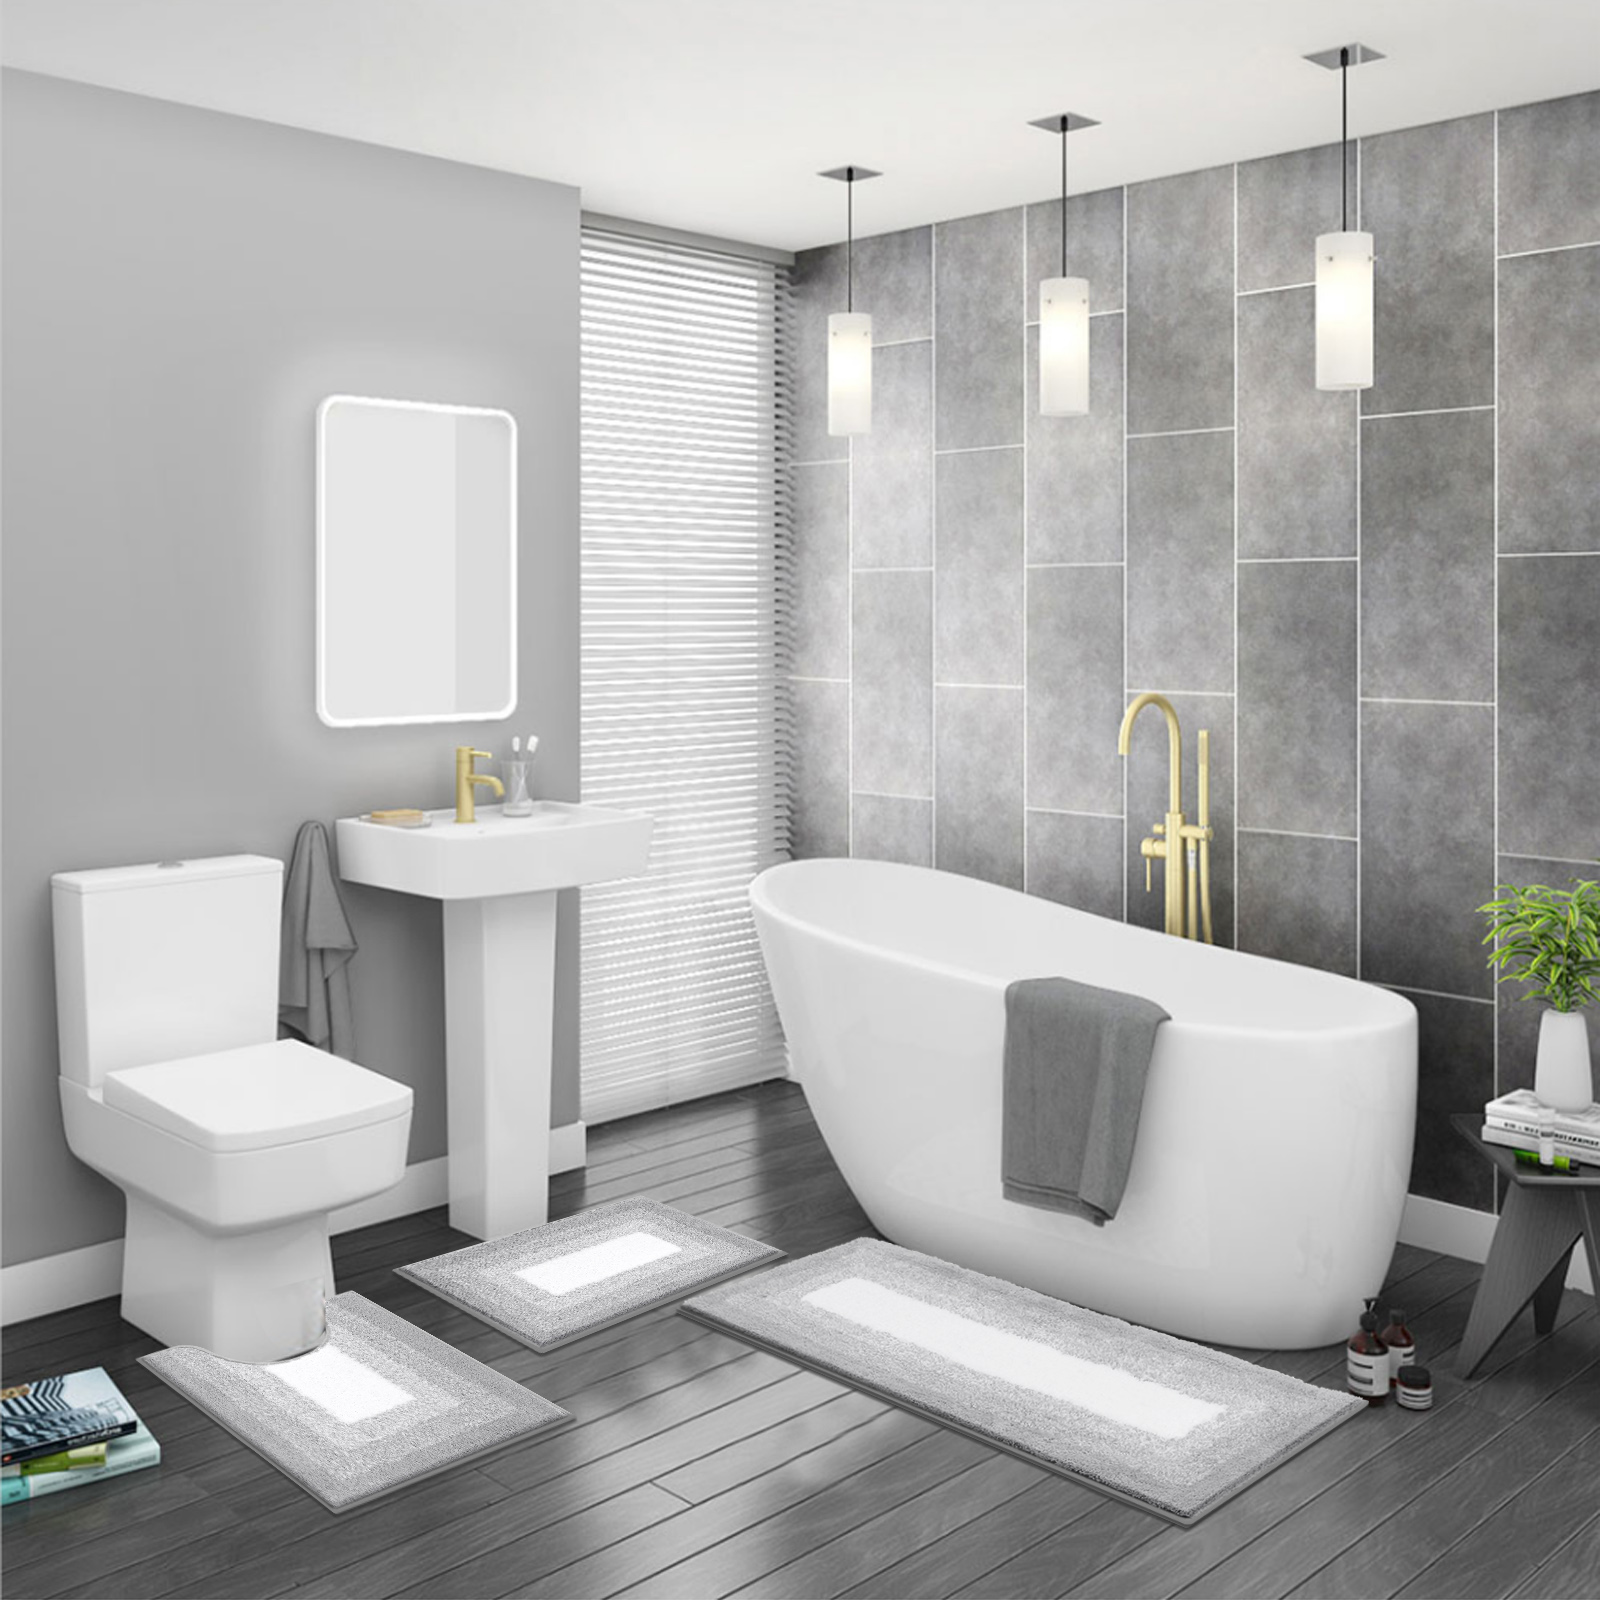 Ileading Bathroom Rugs Sets 4 Piece Plush Shaggy Microfiber Bath Rug with U-Shaped Contour Toilet Mat - image 4 of 11